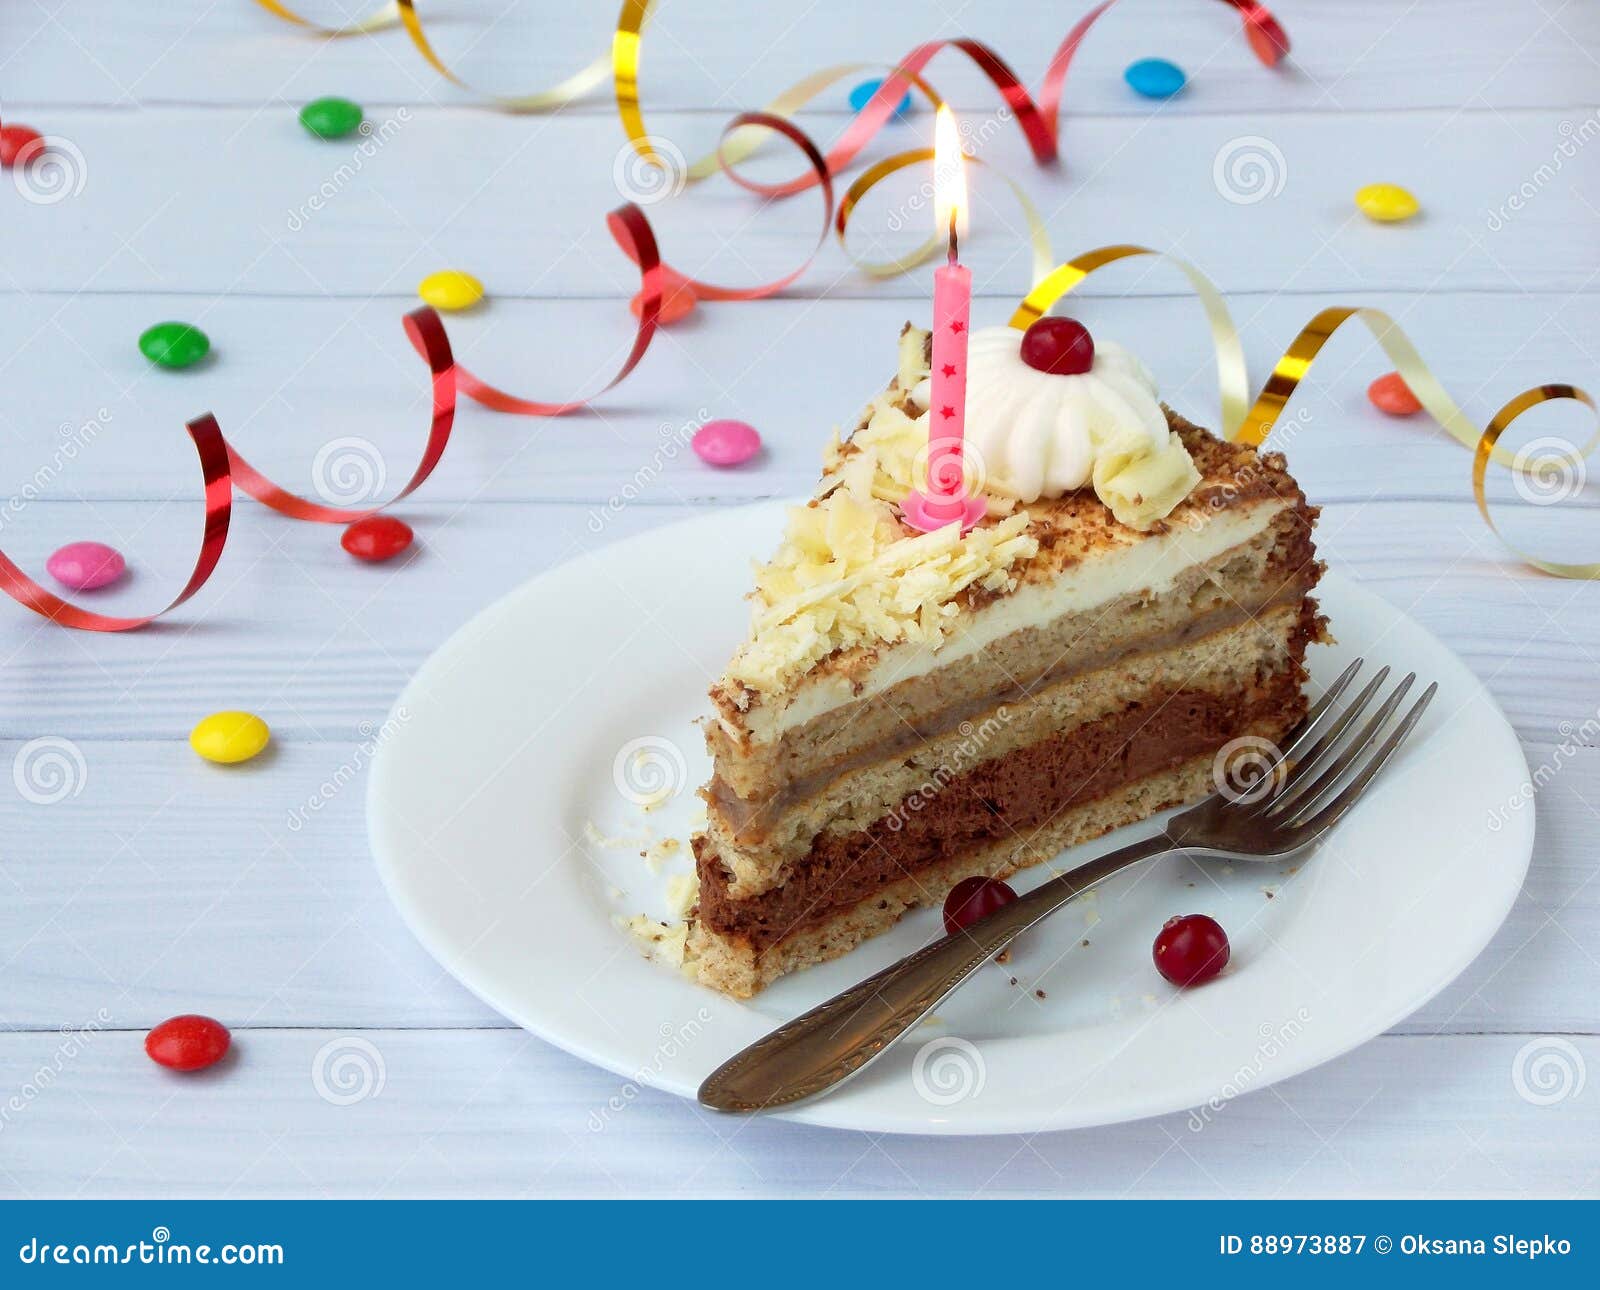 Happy birthday banana cake with chocolate icing - NZ Herald